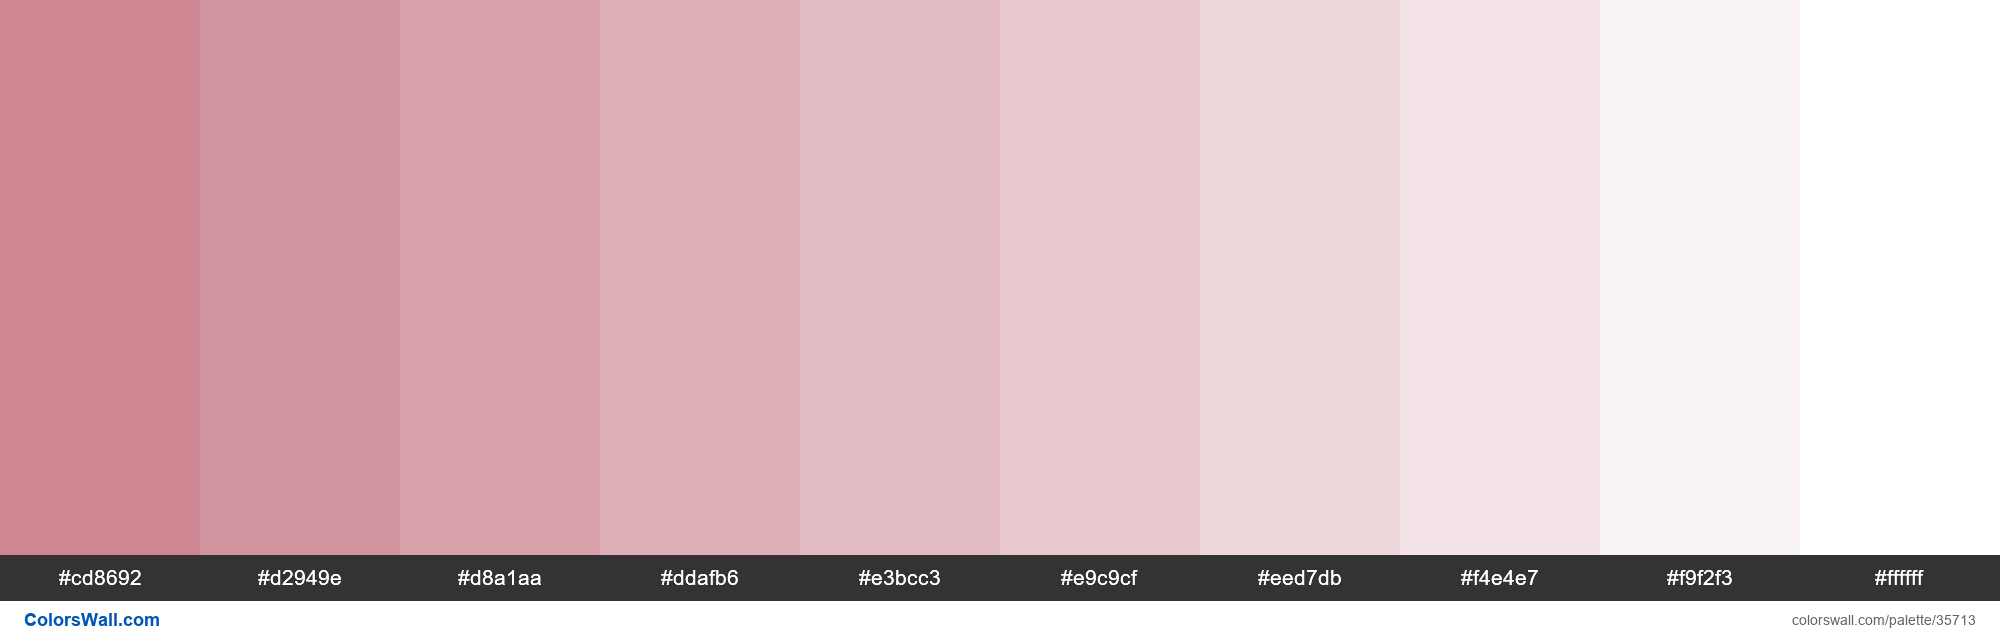 Tints XKCD Color old pink #c77986 hex colors palette - ColorsWall